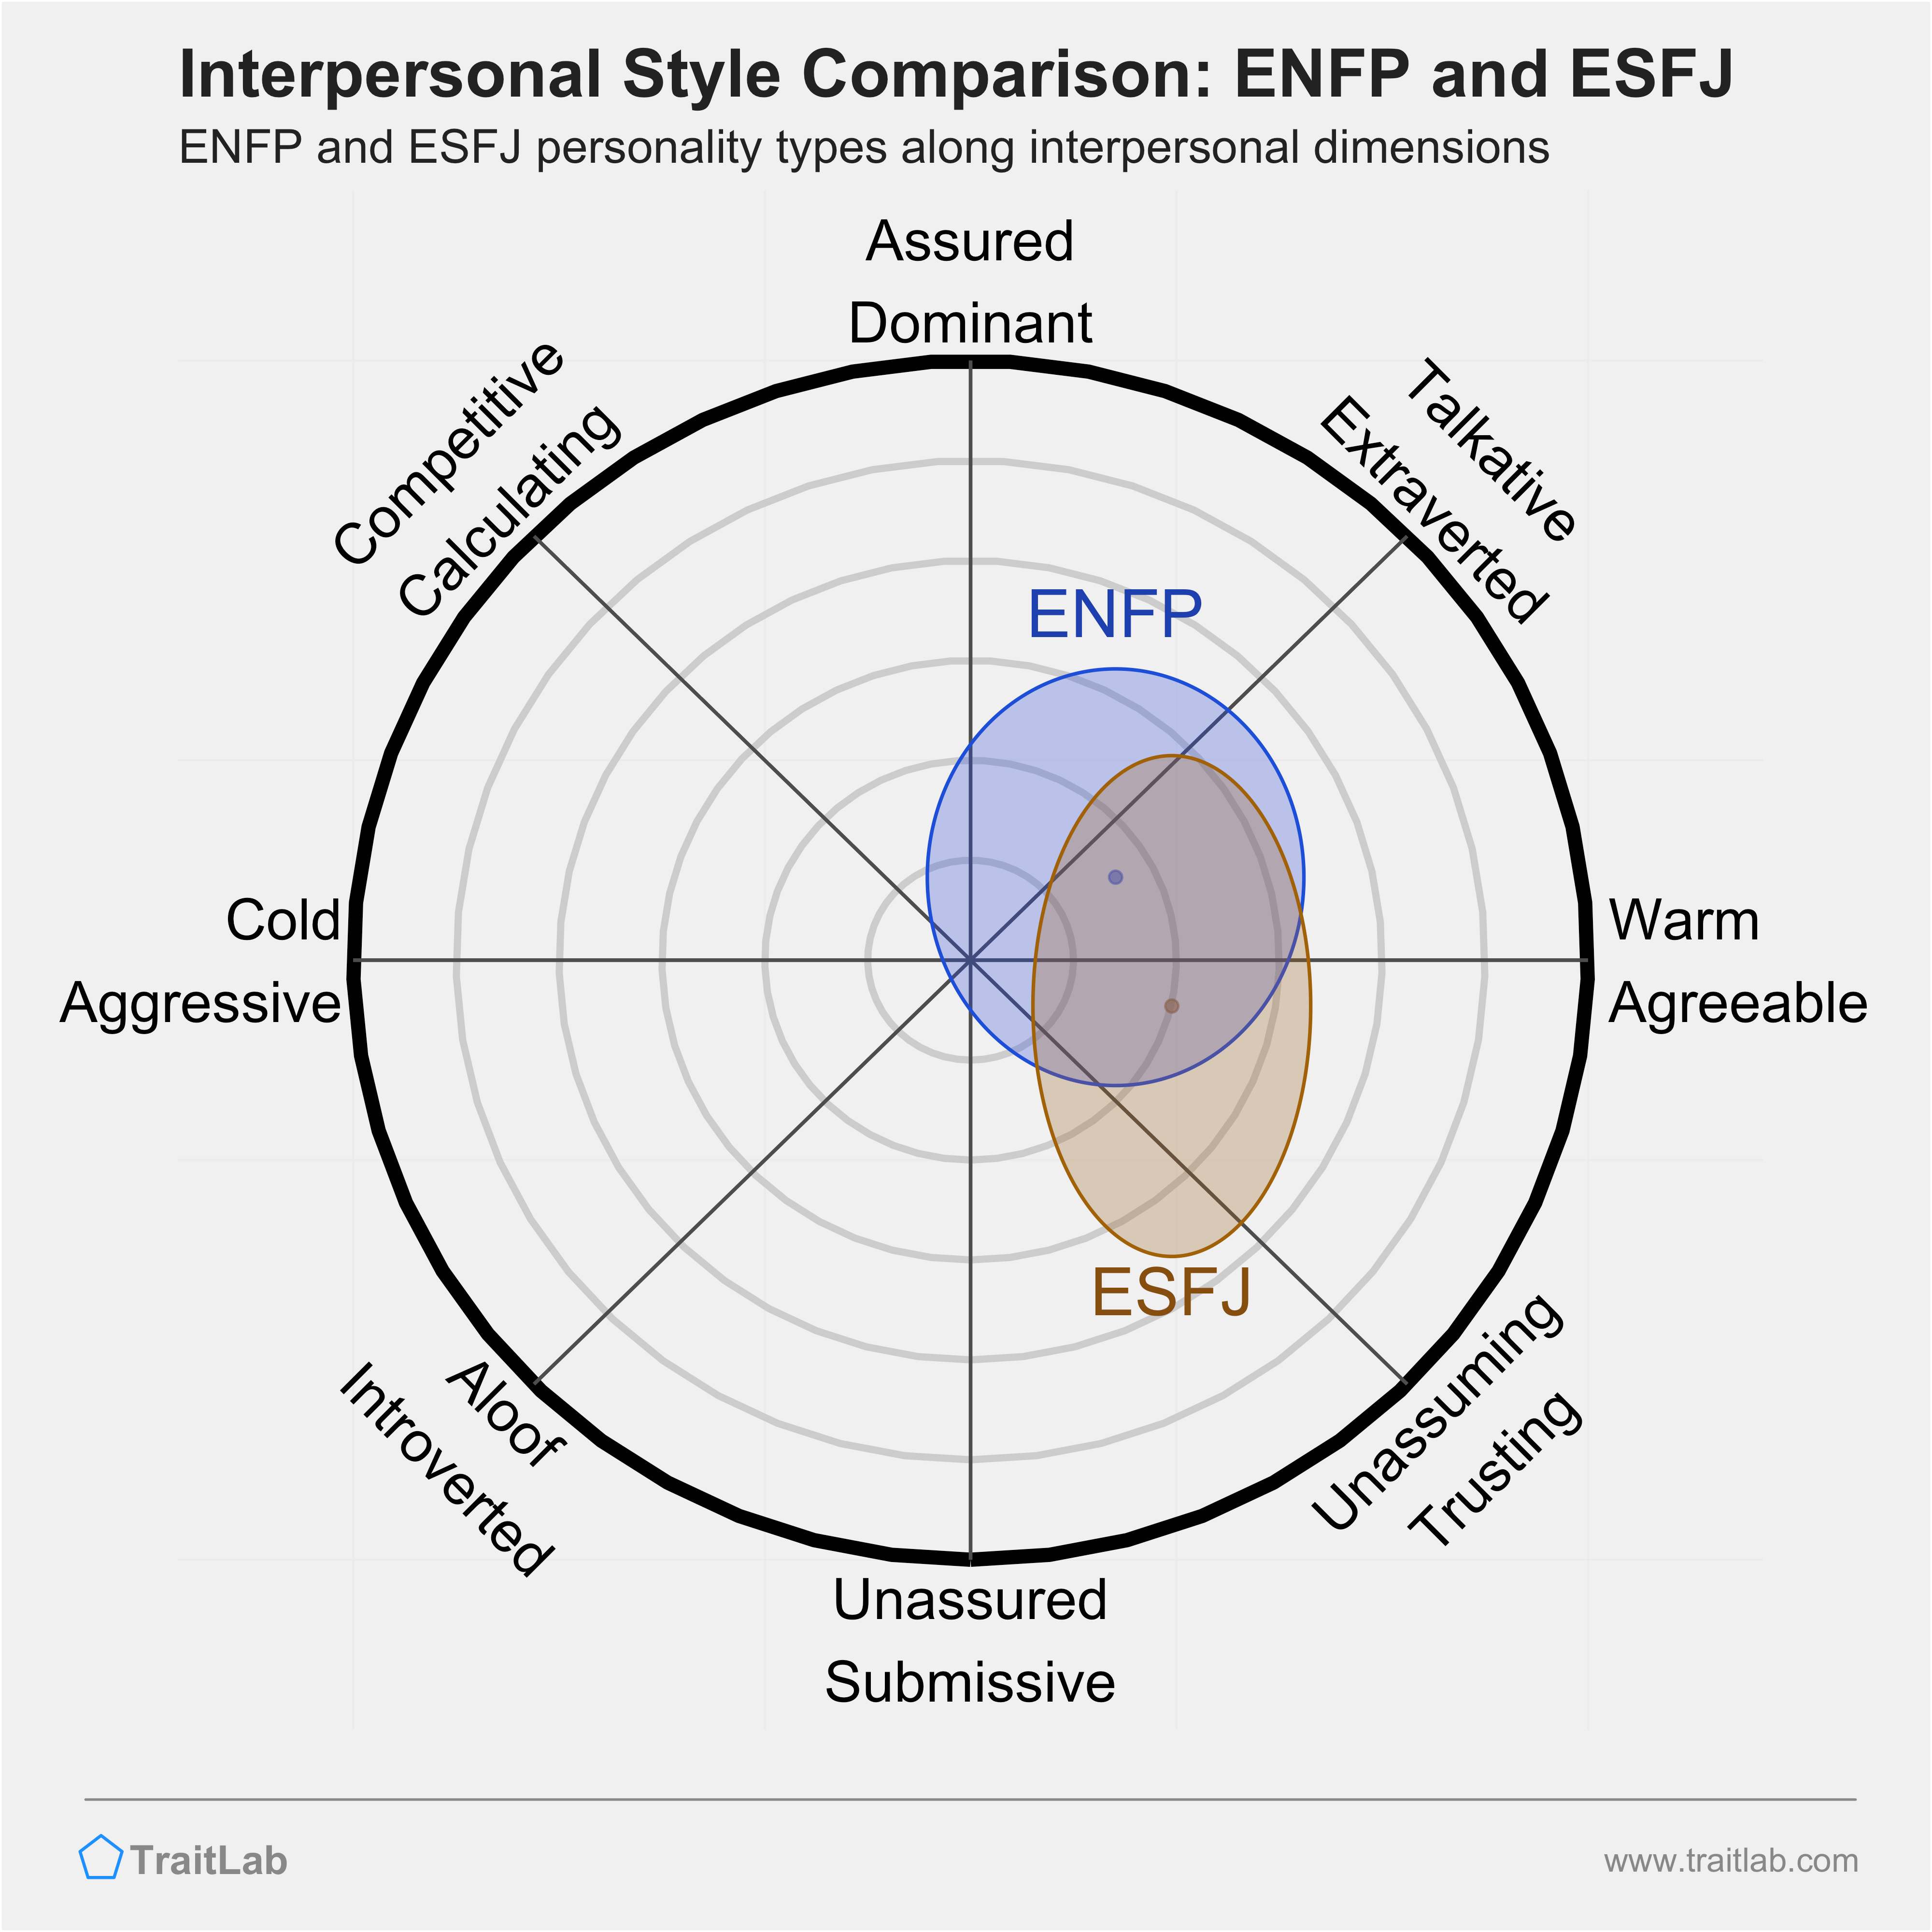 ENFP and ESFJ comparison across interpersonal dimensions